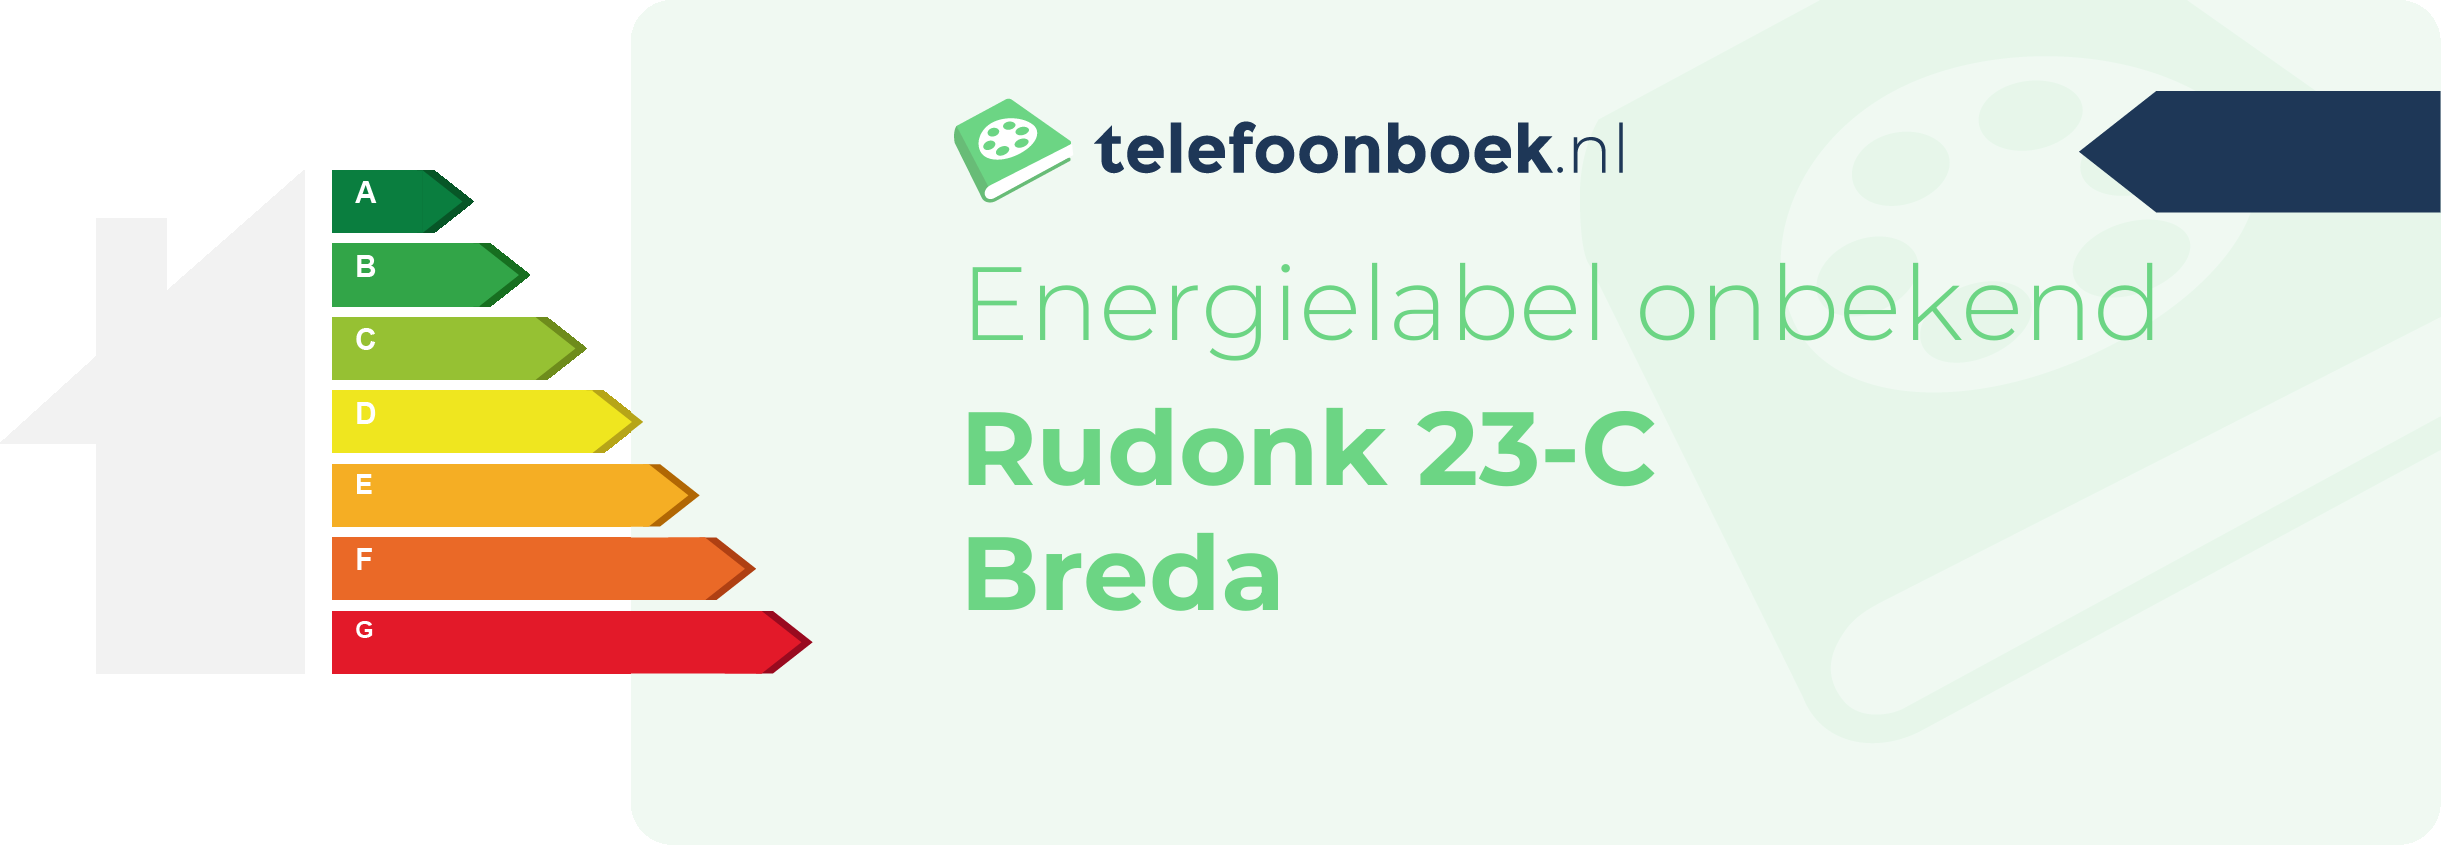 Energielabel Rudonk 23-C Breda